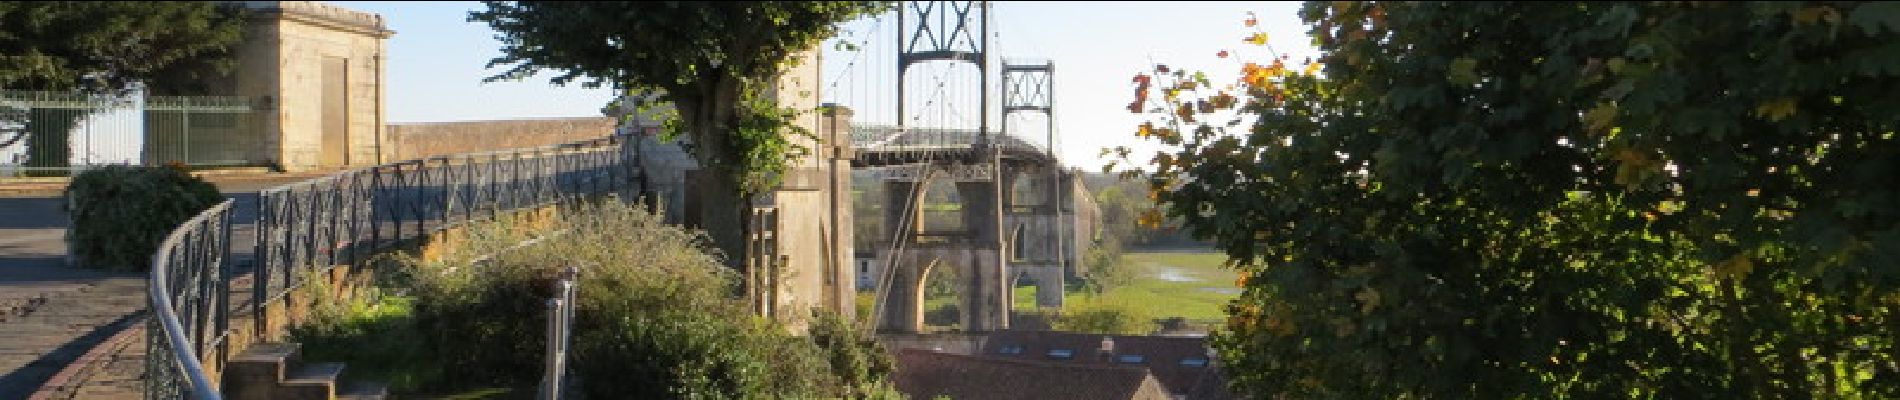 Trail Cycle Rochefort - Les ponts rochefortais - Rochefort - Photo